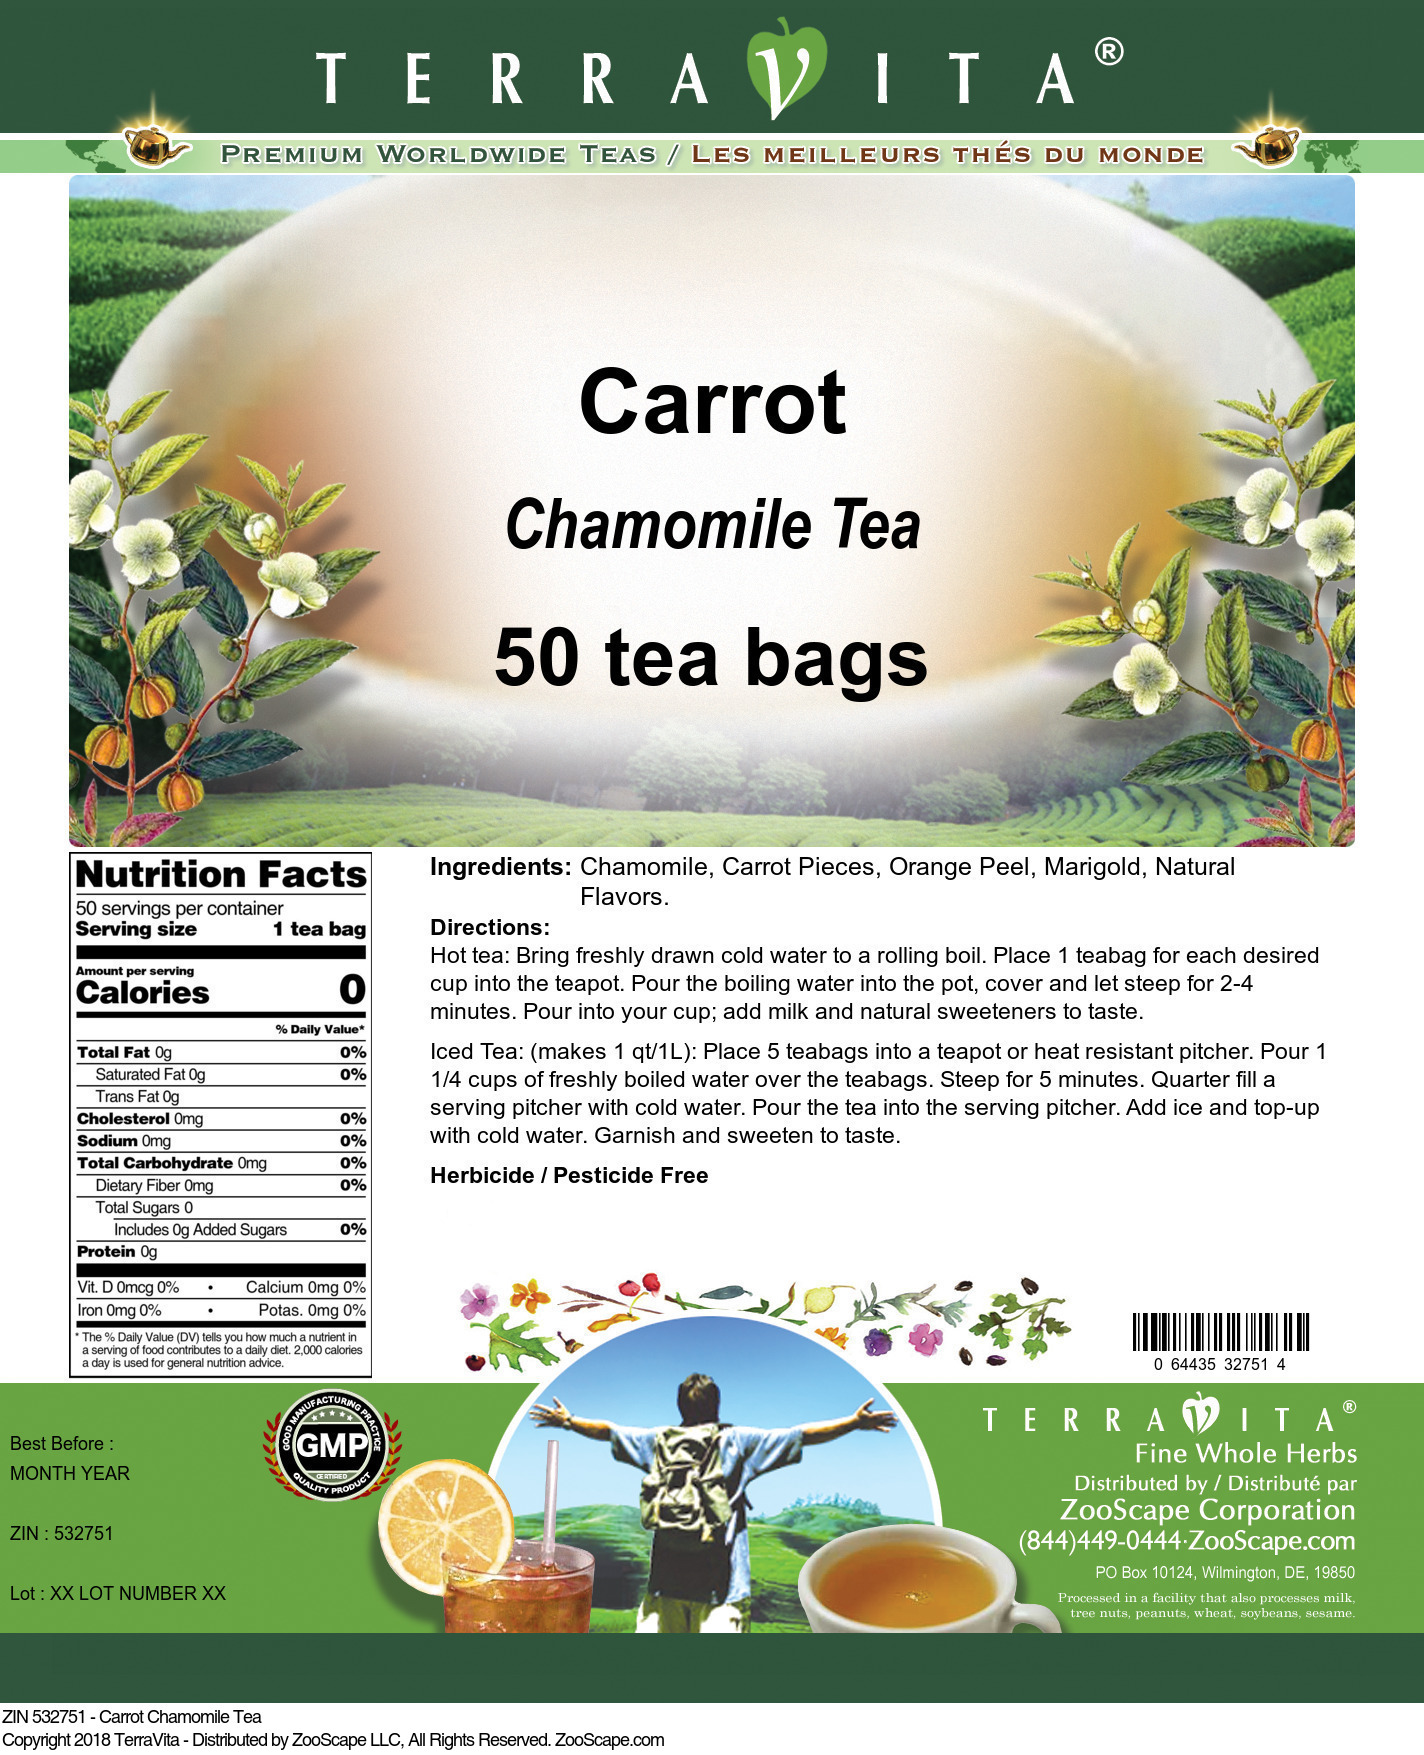 Carrot Chamomile Tea - Label